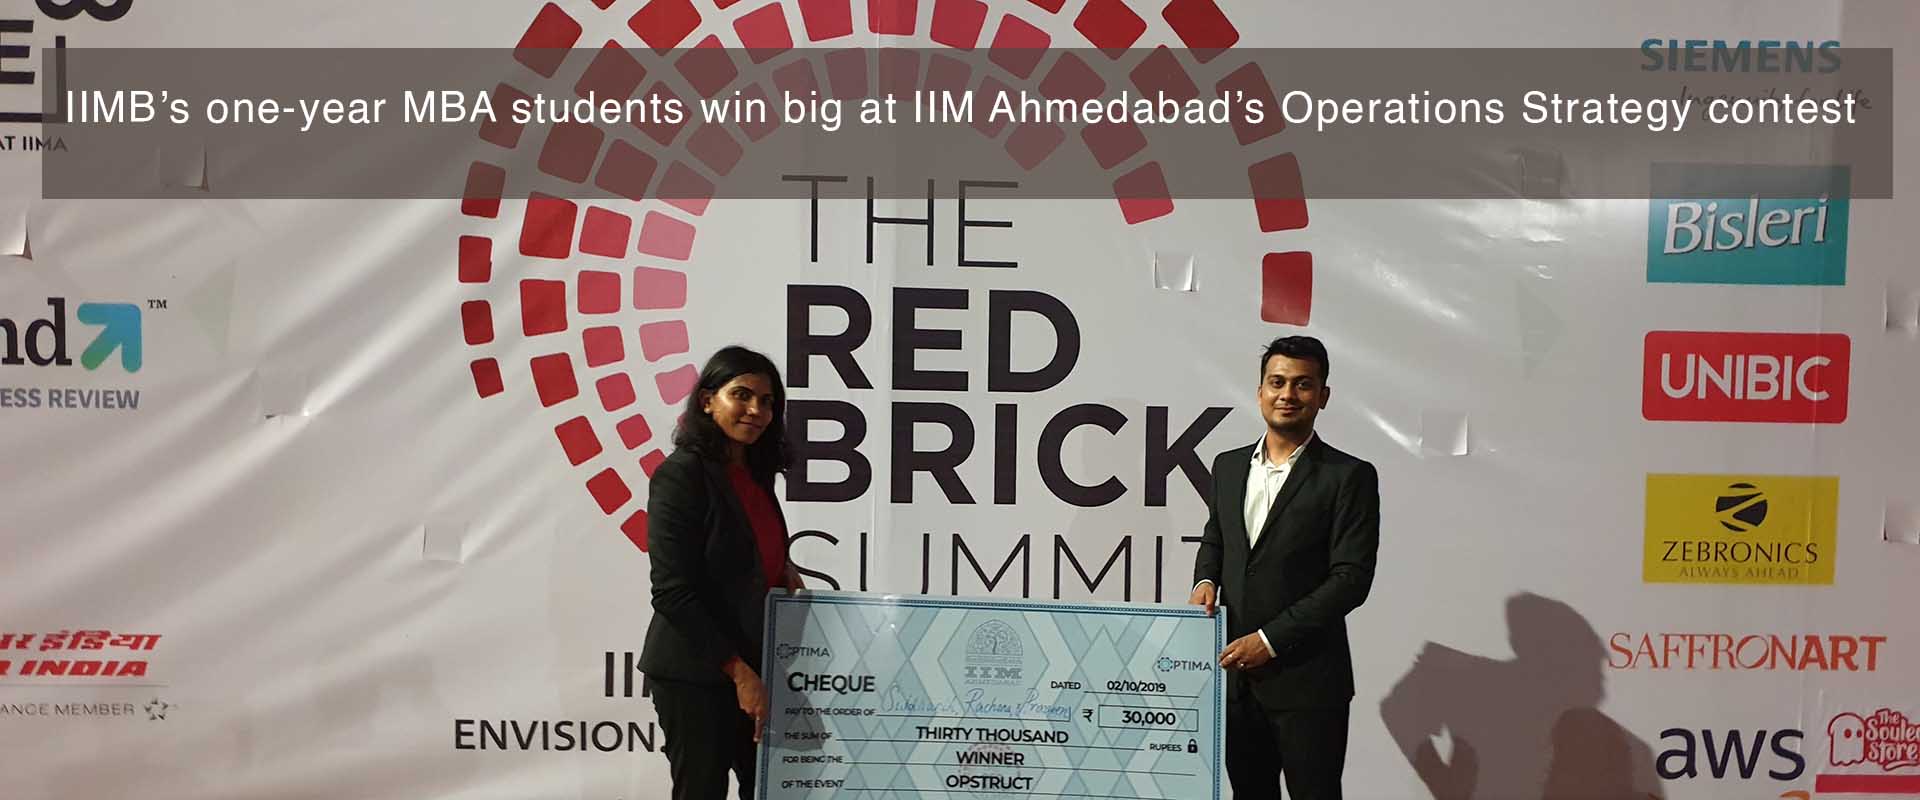 IIMB’s one-year MBA students win big at IIM Ahmedabad’s Operations Strategy contest